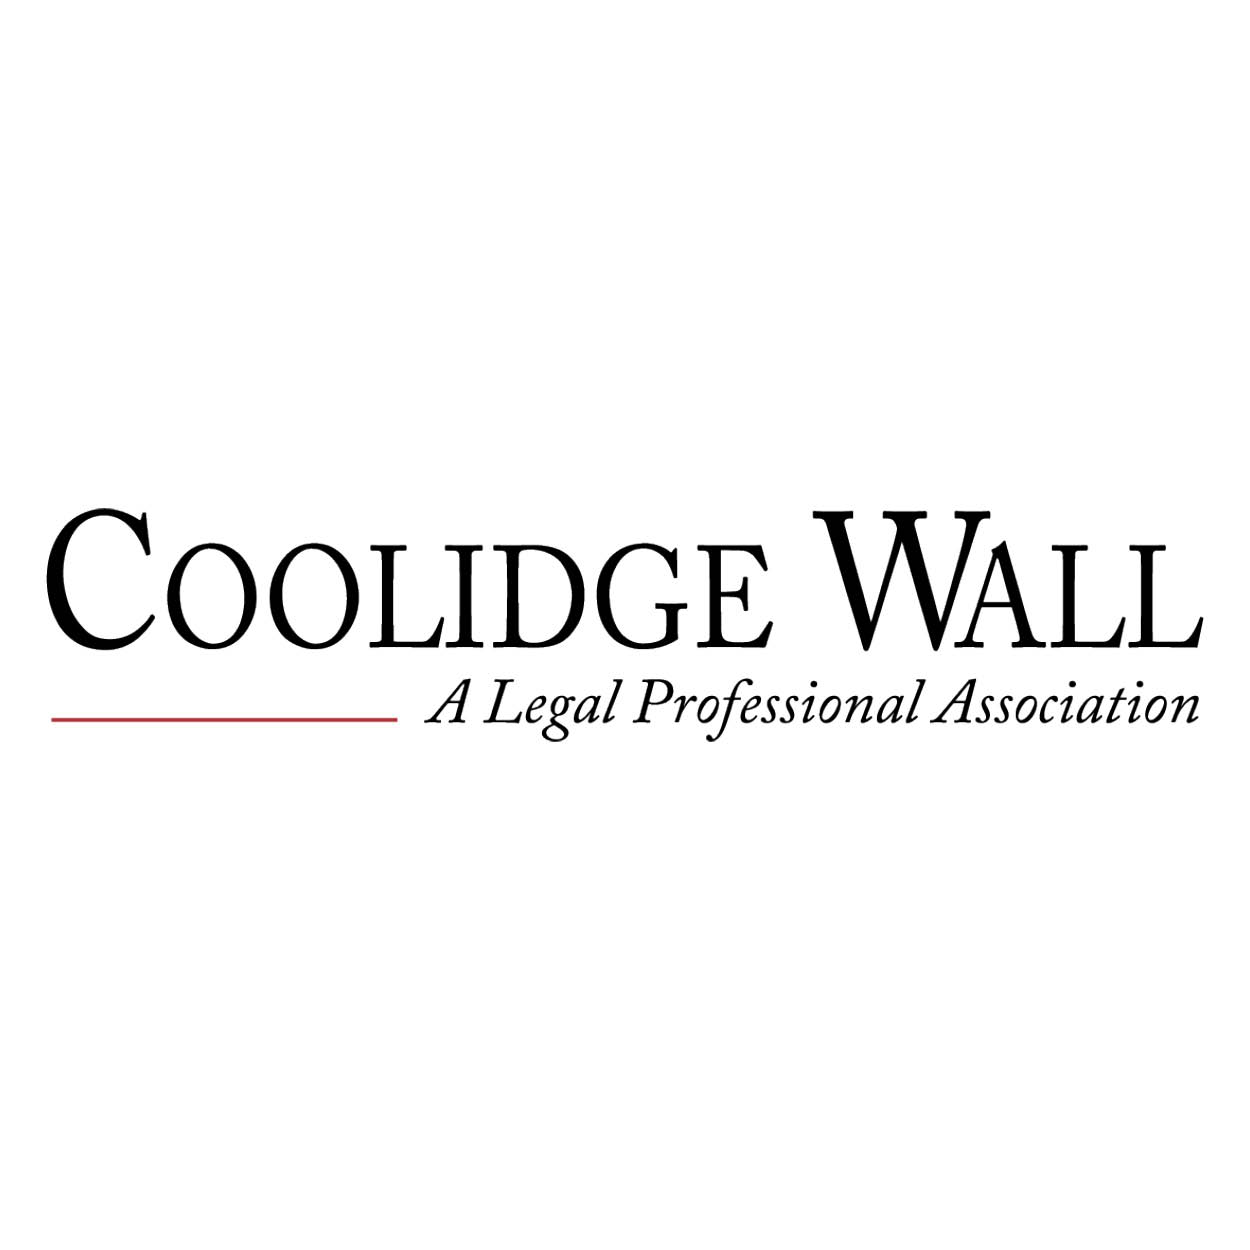 Coolidge Wall